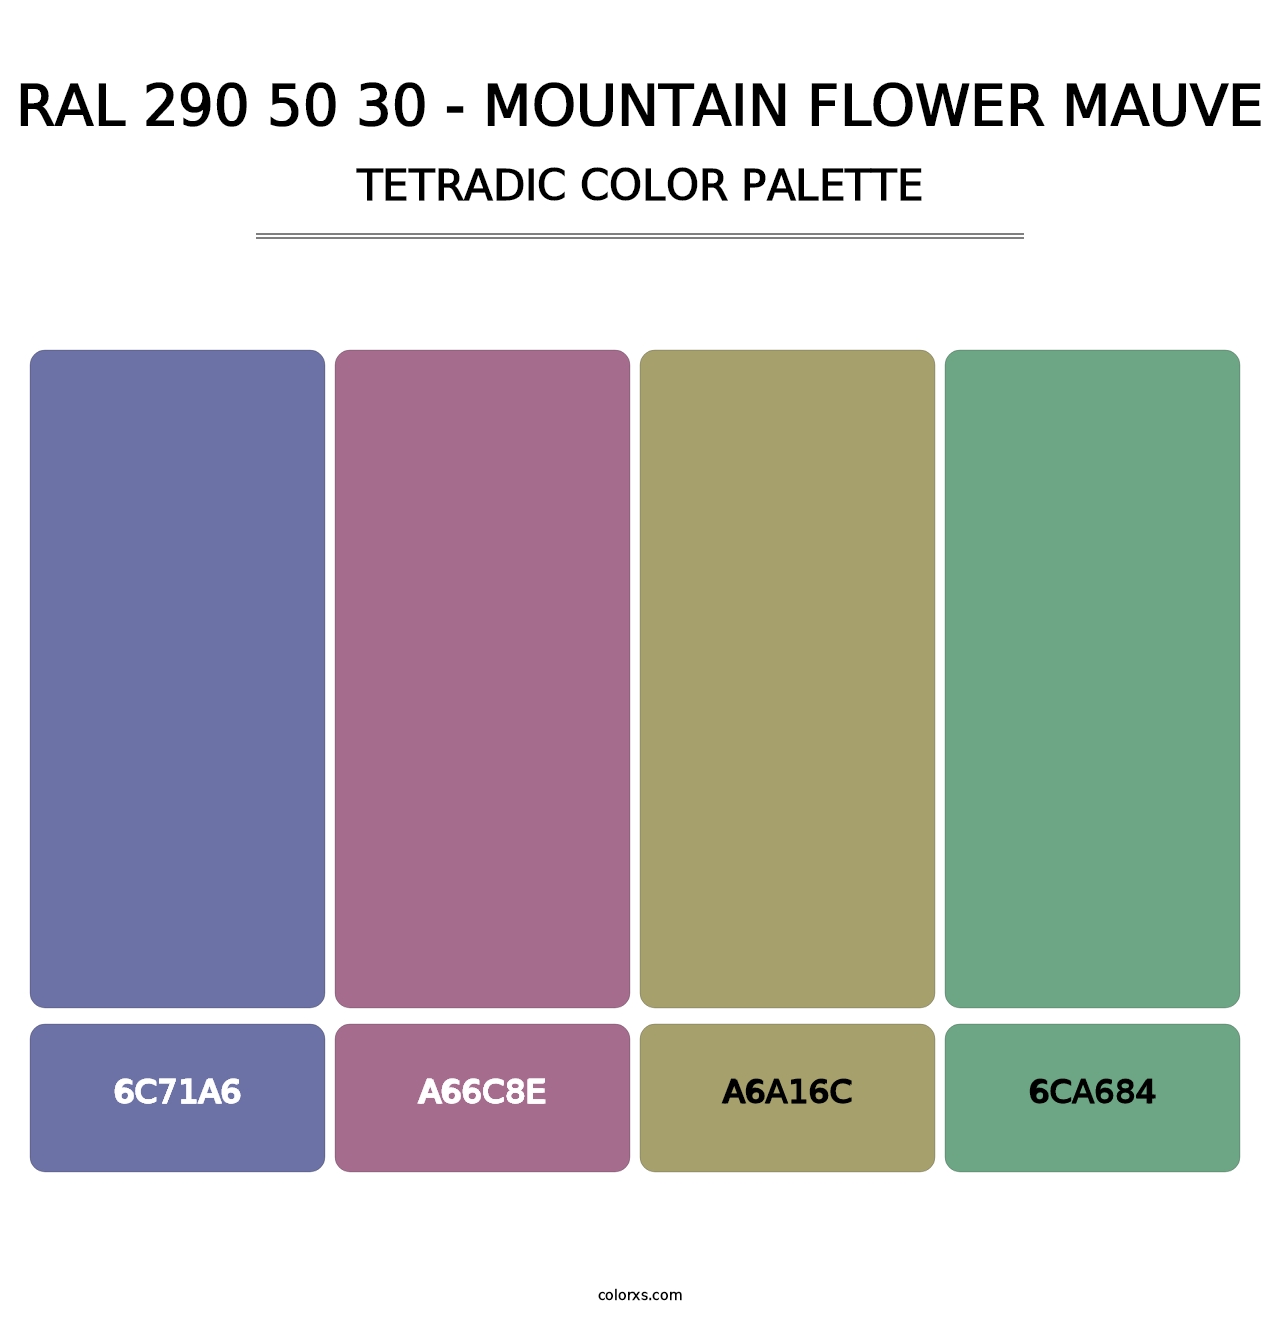 RAL 290 50 30 - Mountain Flower Mauve - Tetradic Color Palette